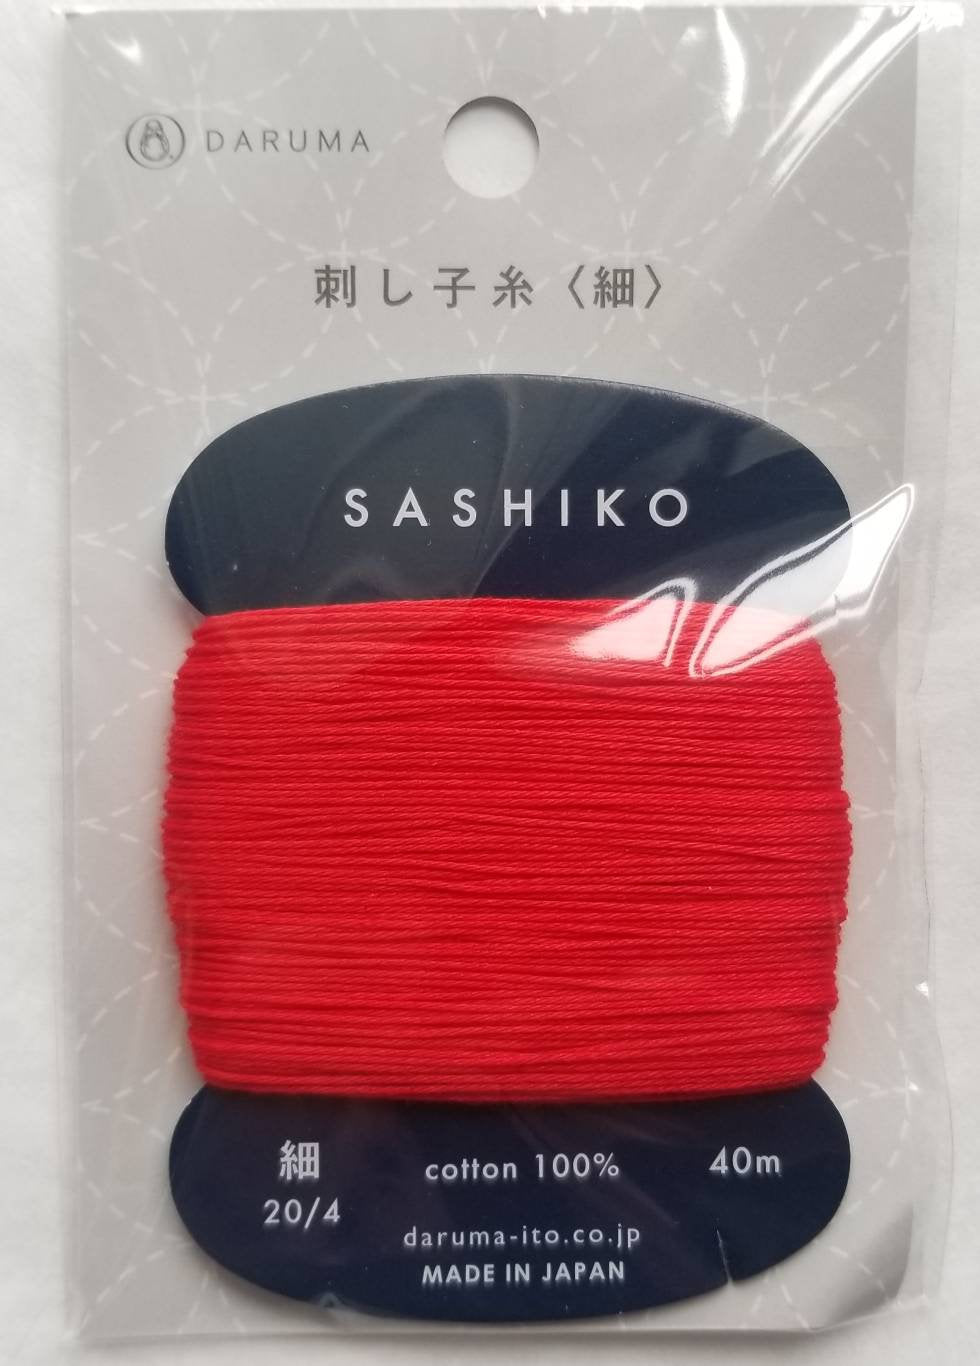 Daruma #213 RED Japanese Cotton SASHIKO thread 40 meter card 20/4 赤 red